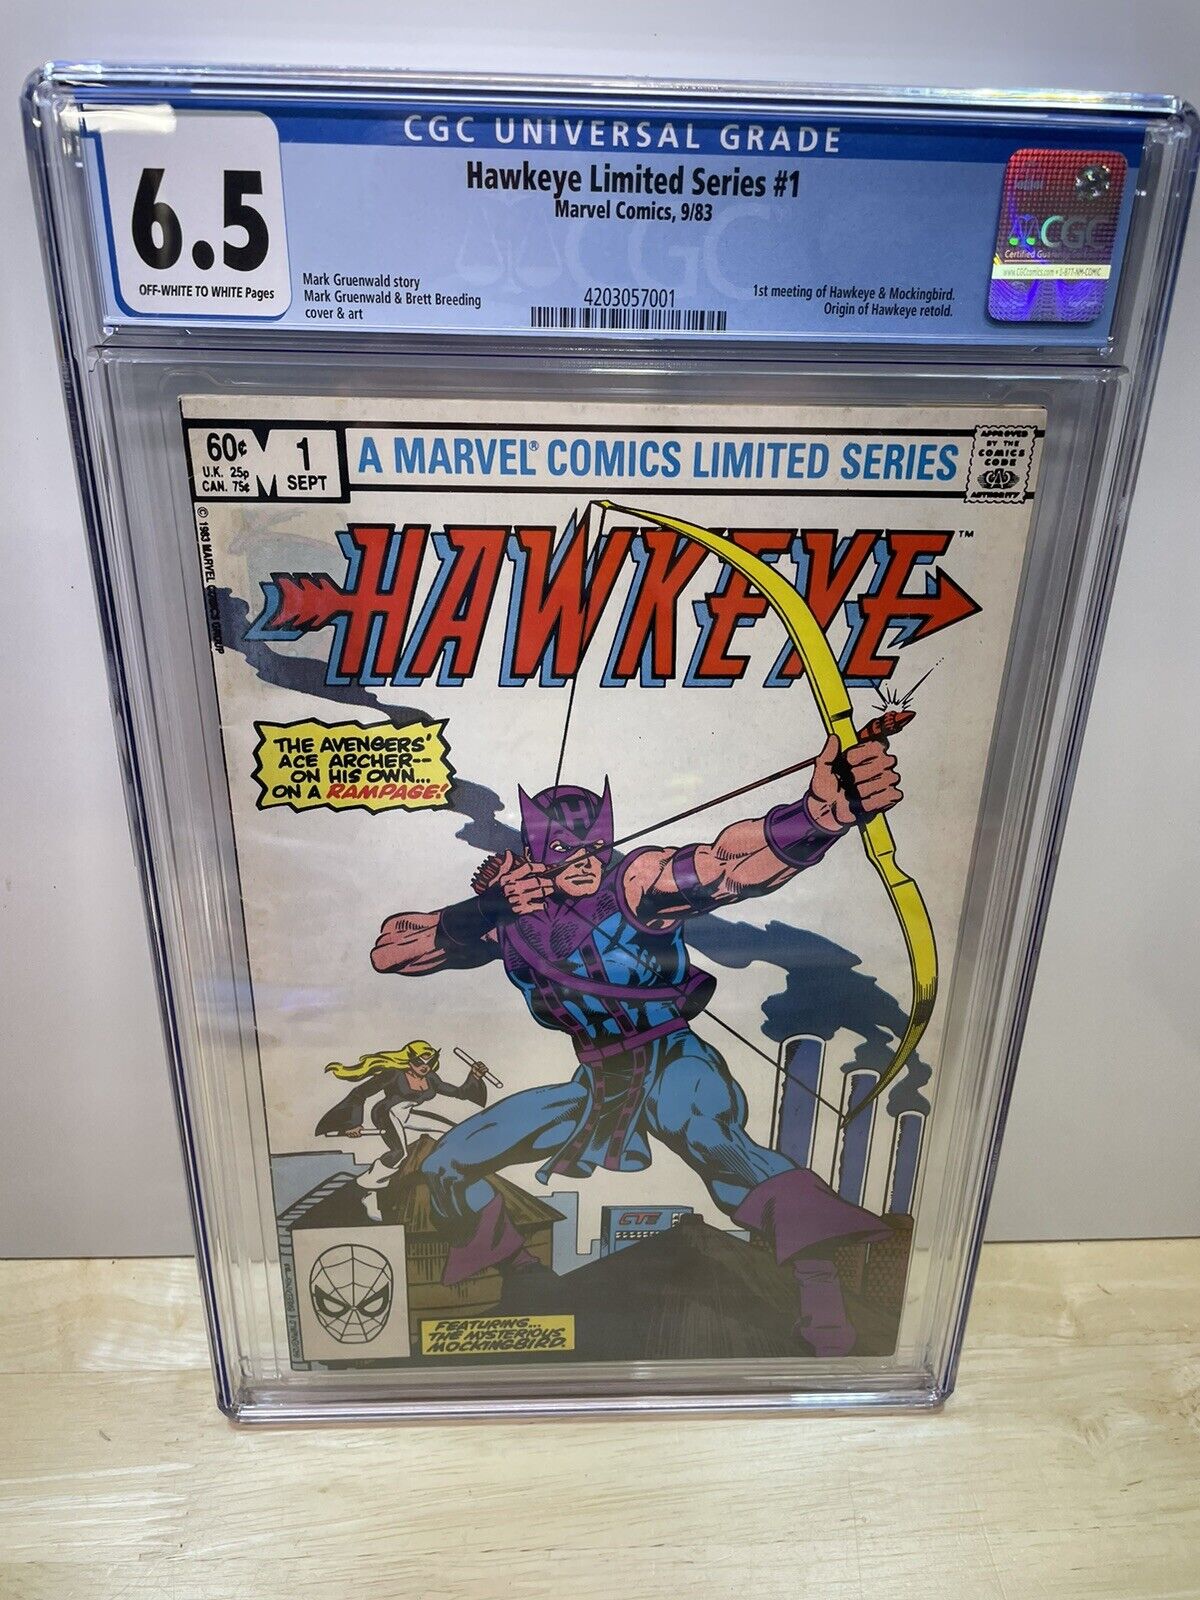 HAWKEYE Limited Series #1 (Marvel Comics, 1983) CGC Graded 6.5